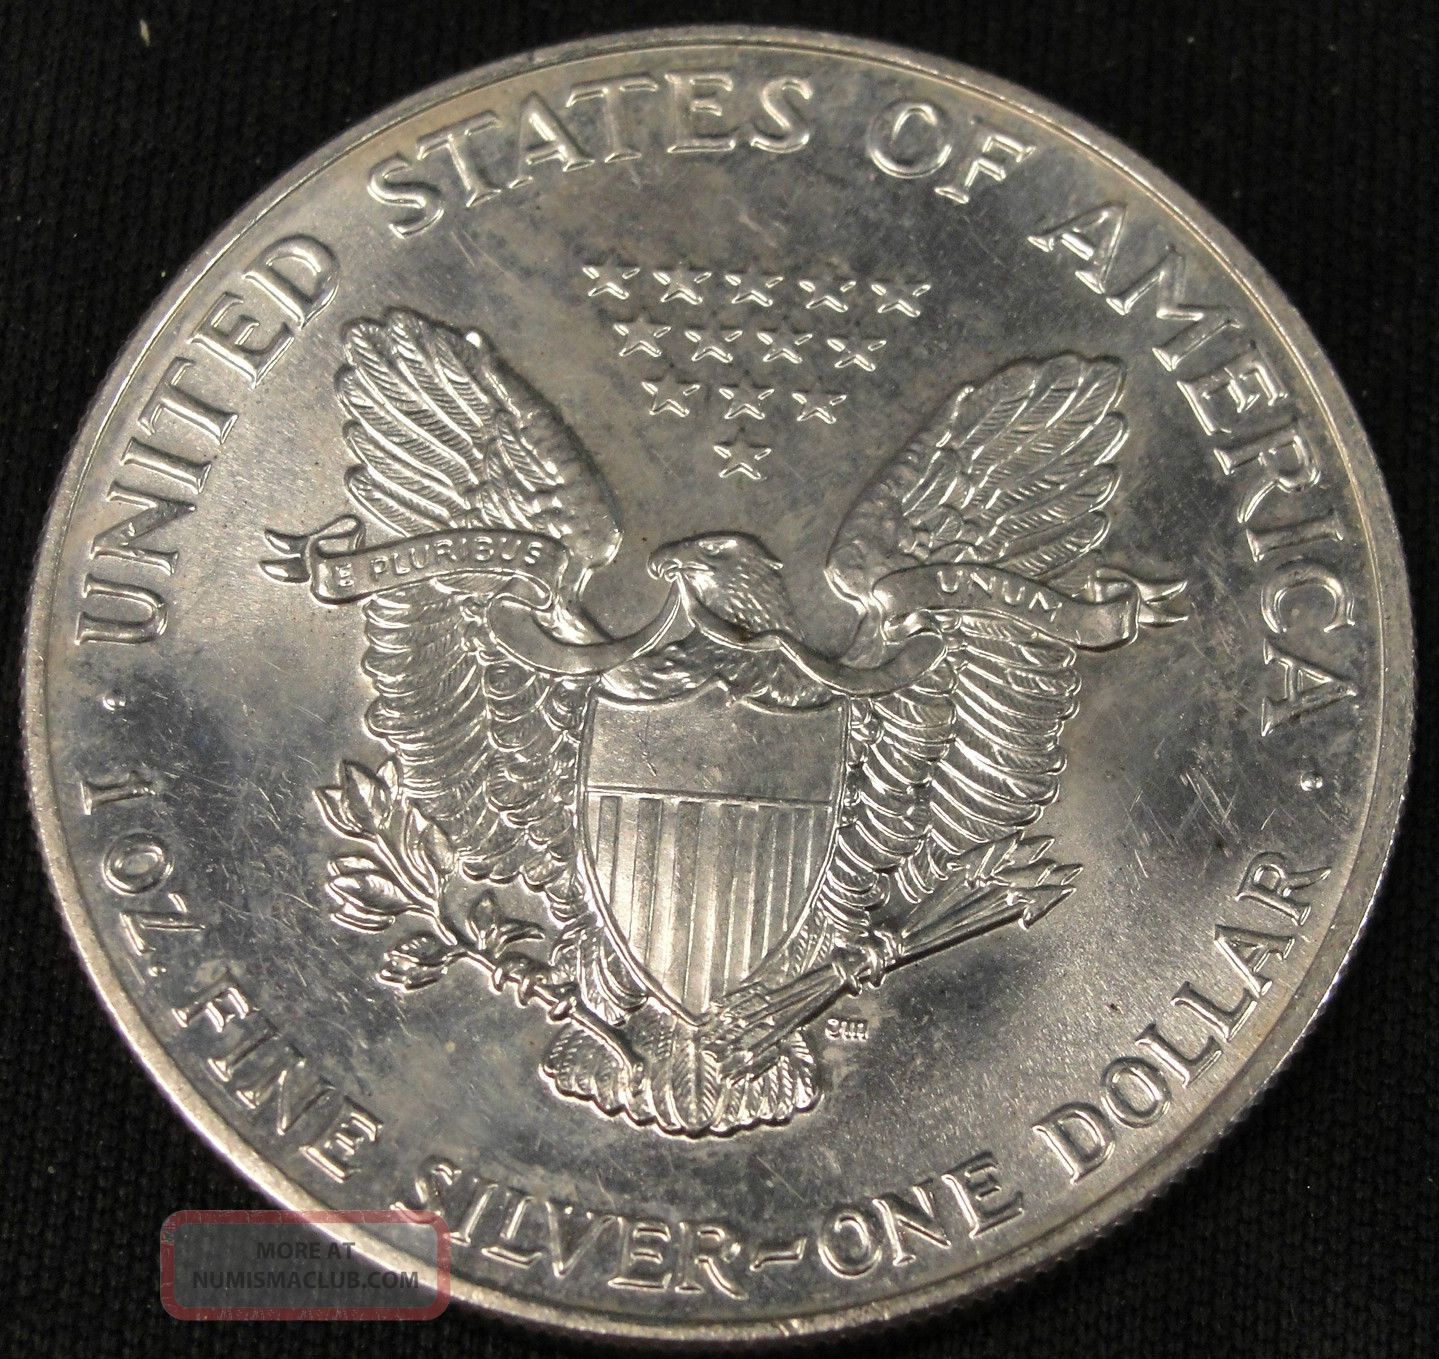 1990 american eagle silver bullion coins